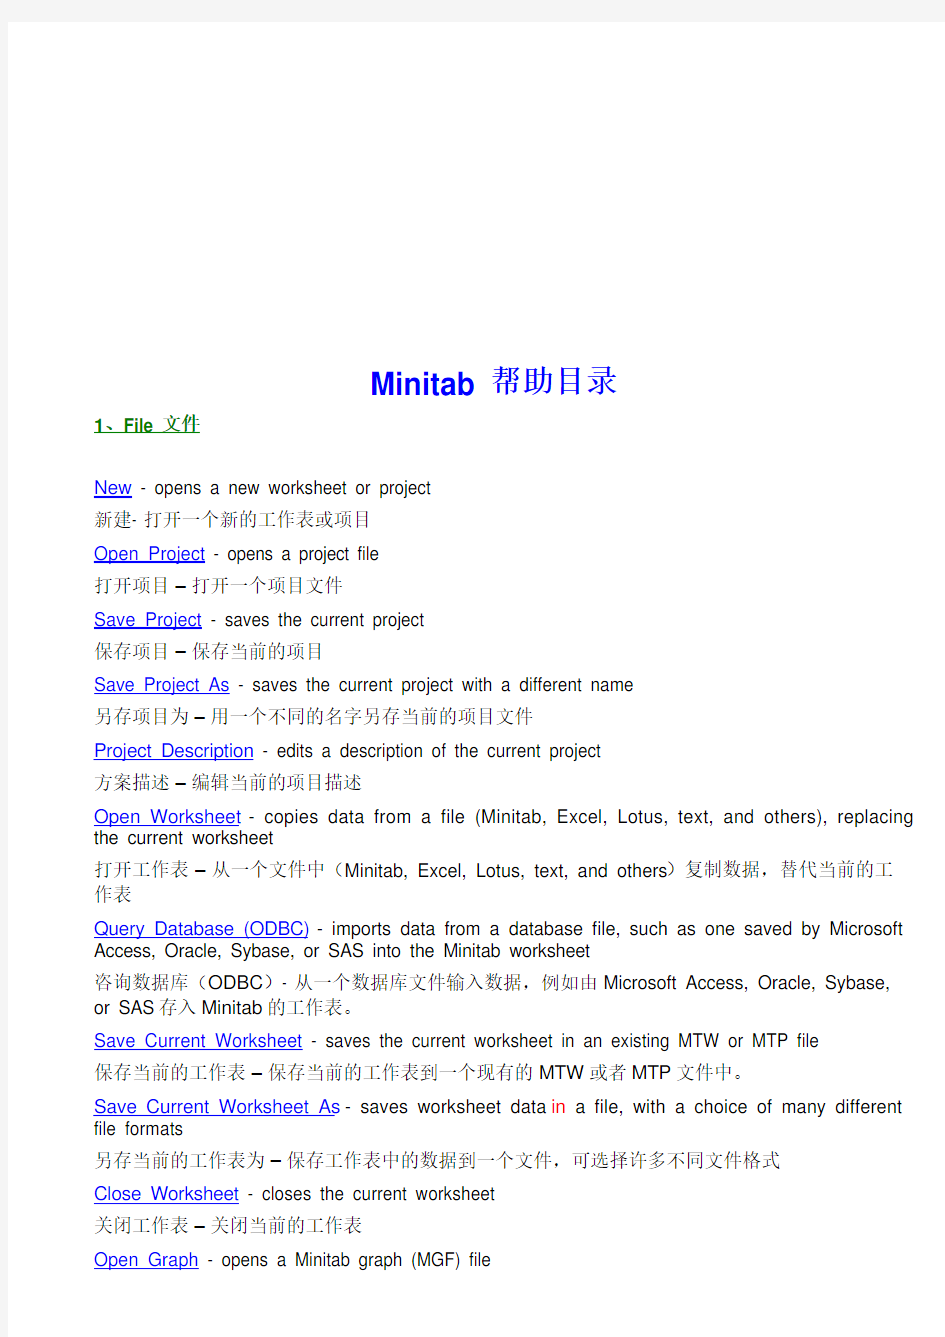 Minitab帮助基础知识(doc 14页)